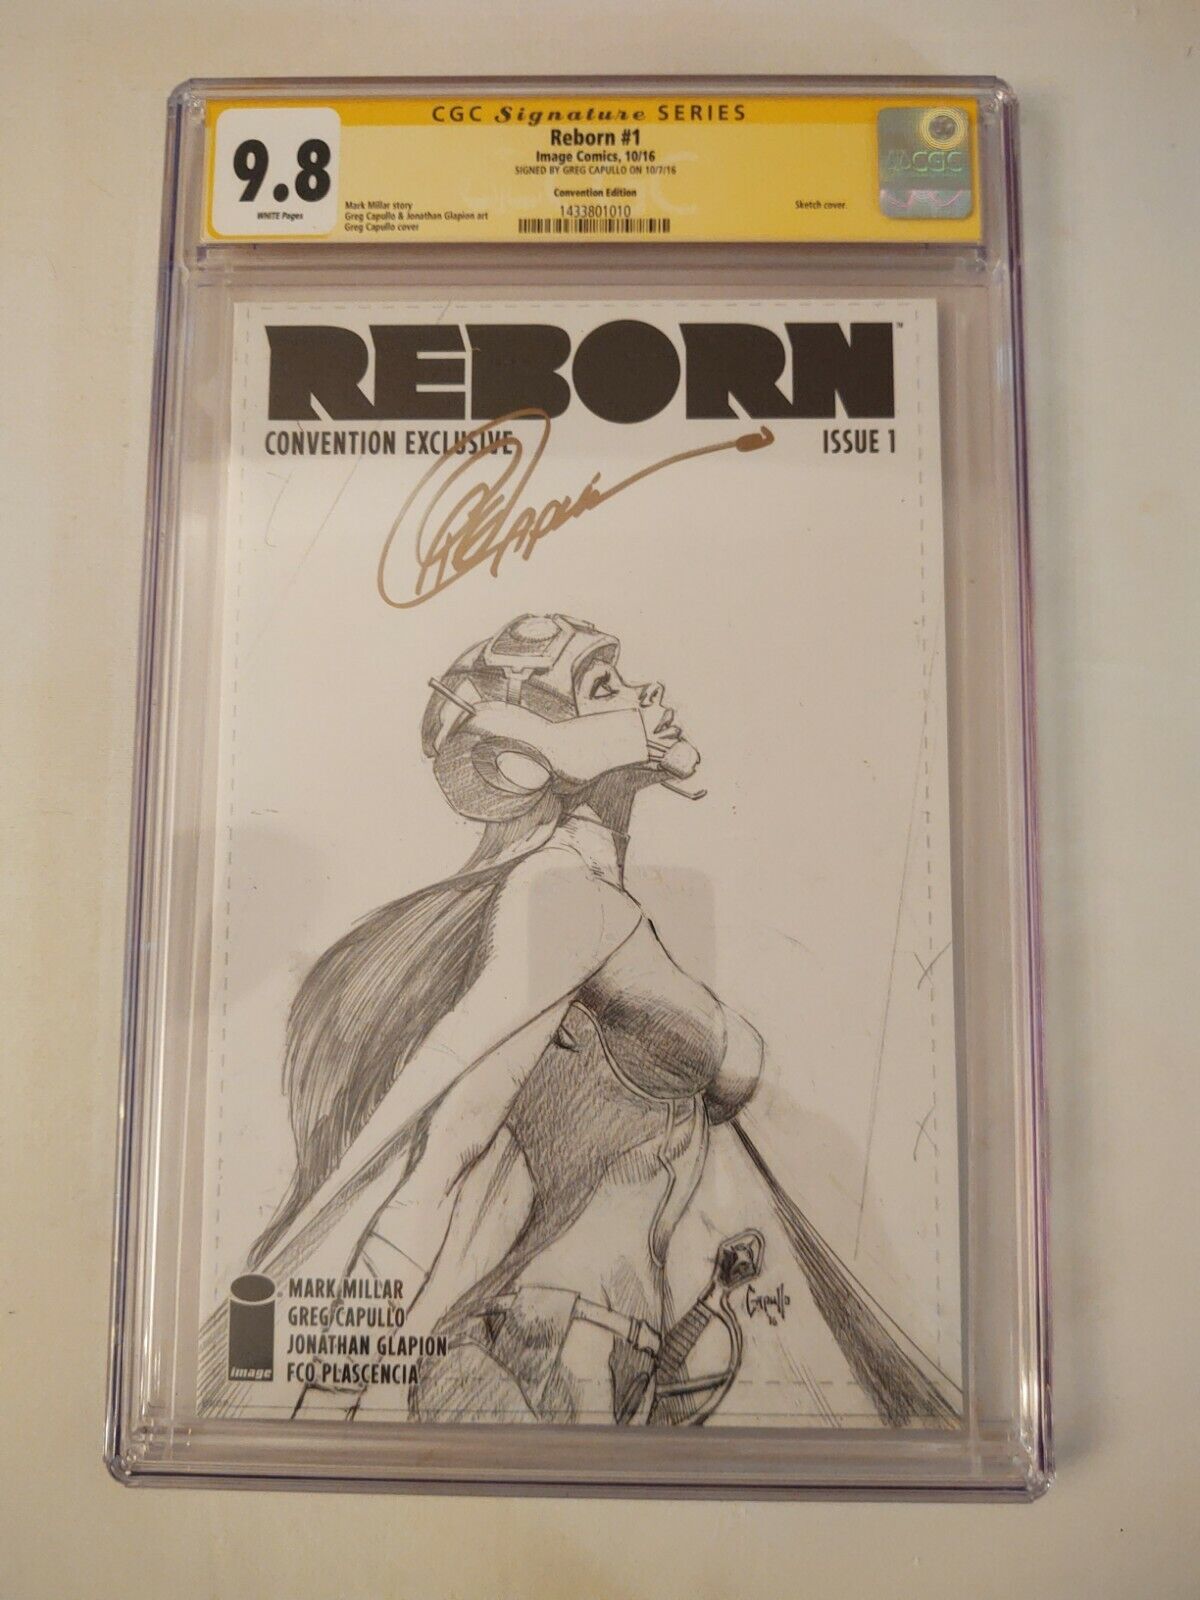 Reborn #1 Convention Edition CGC 9.8 Signature Series Signed by Greg Capullo